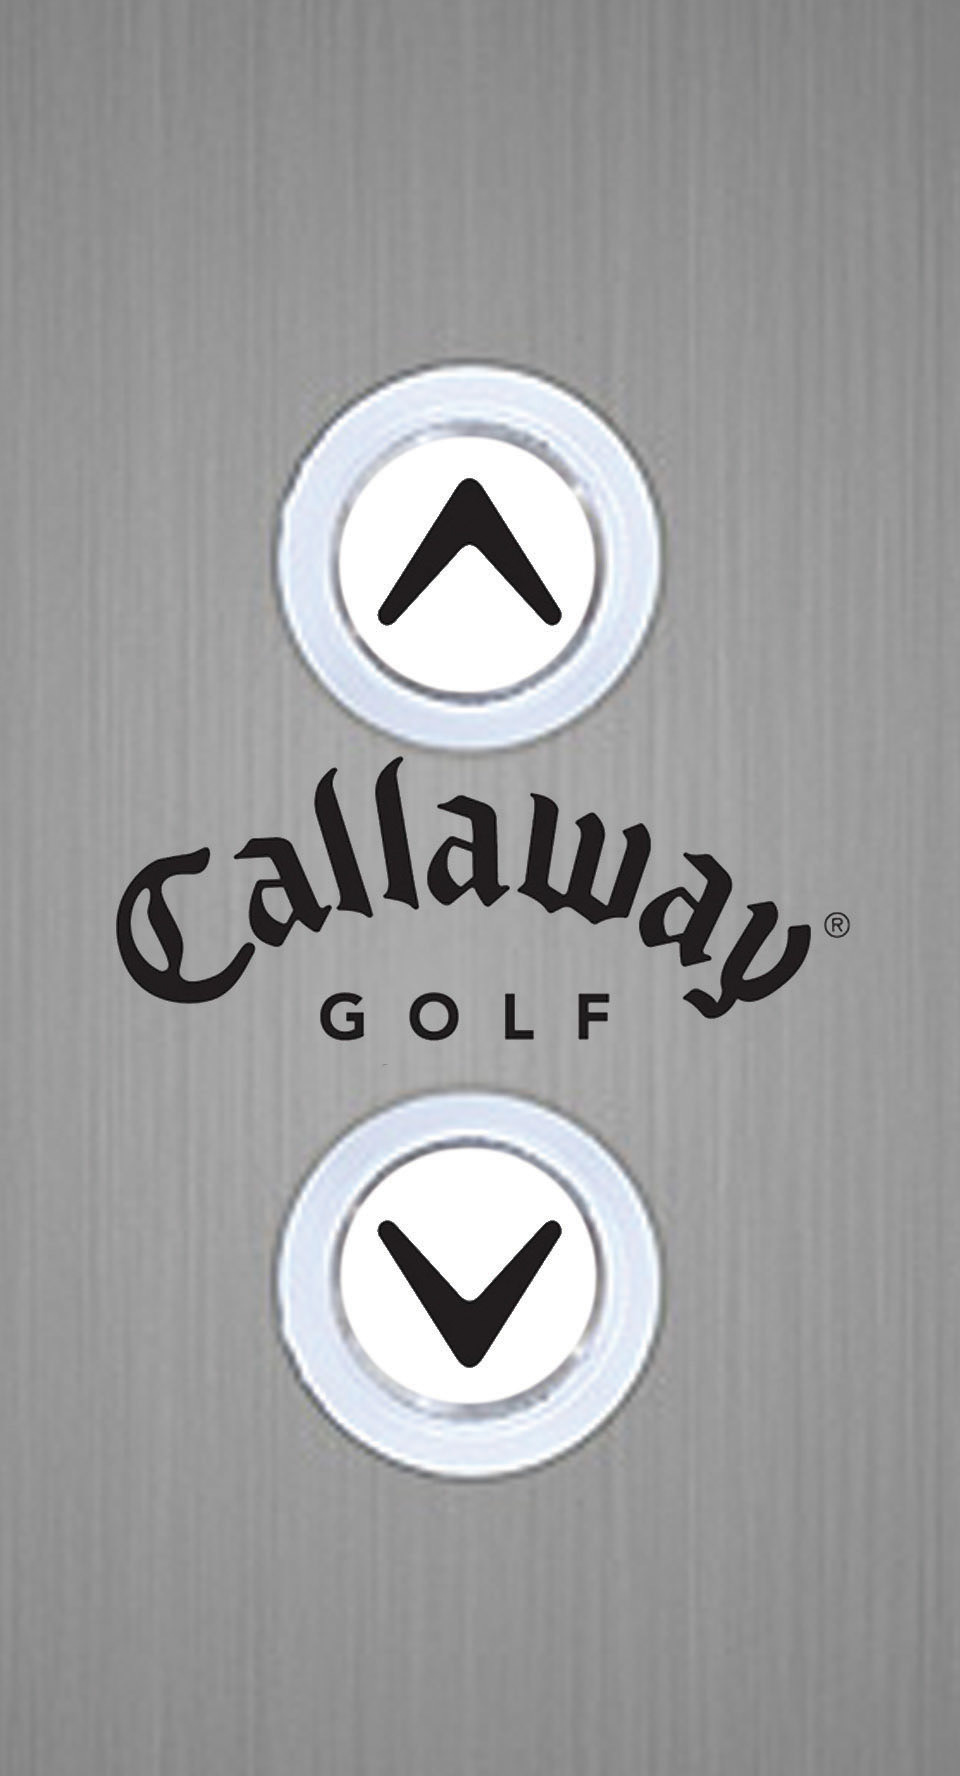 golf Callaway Golf campaign